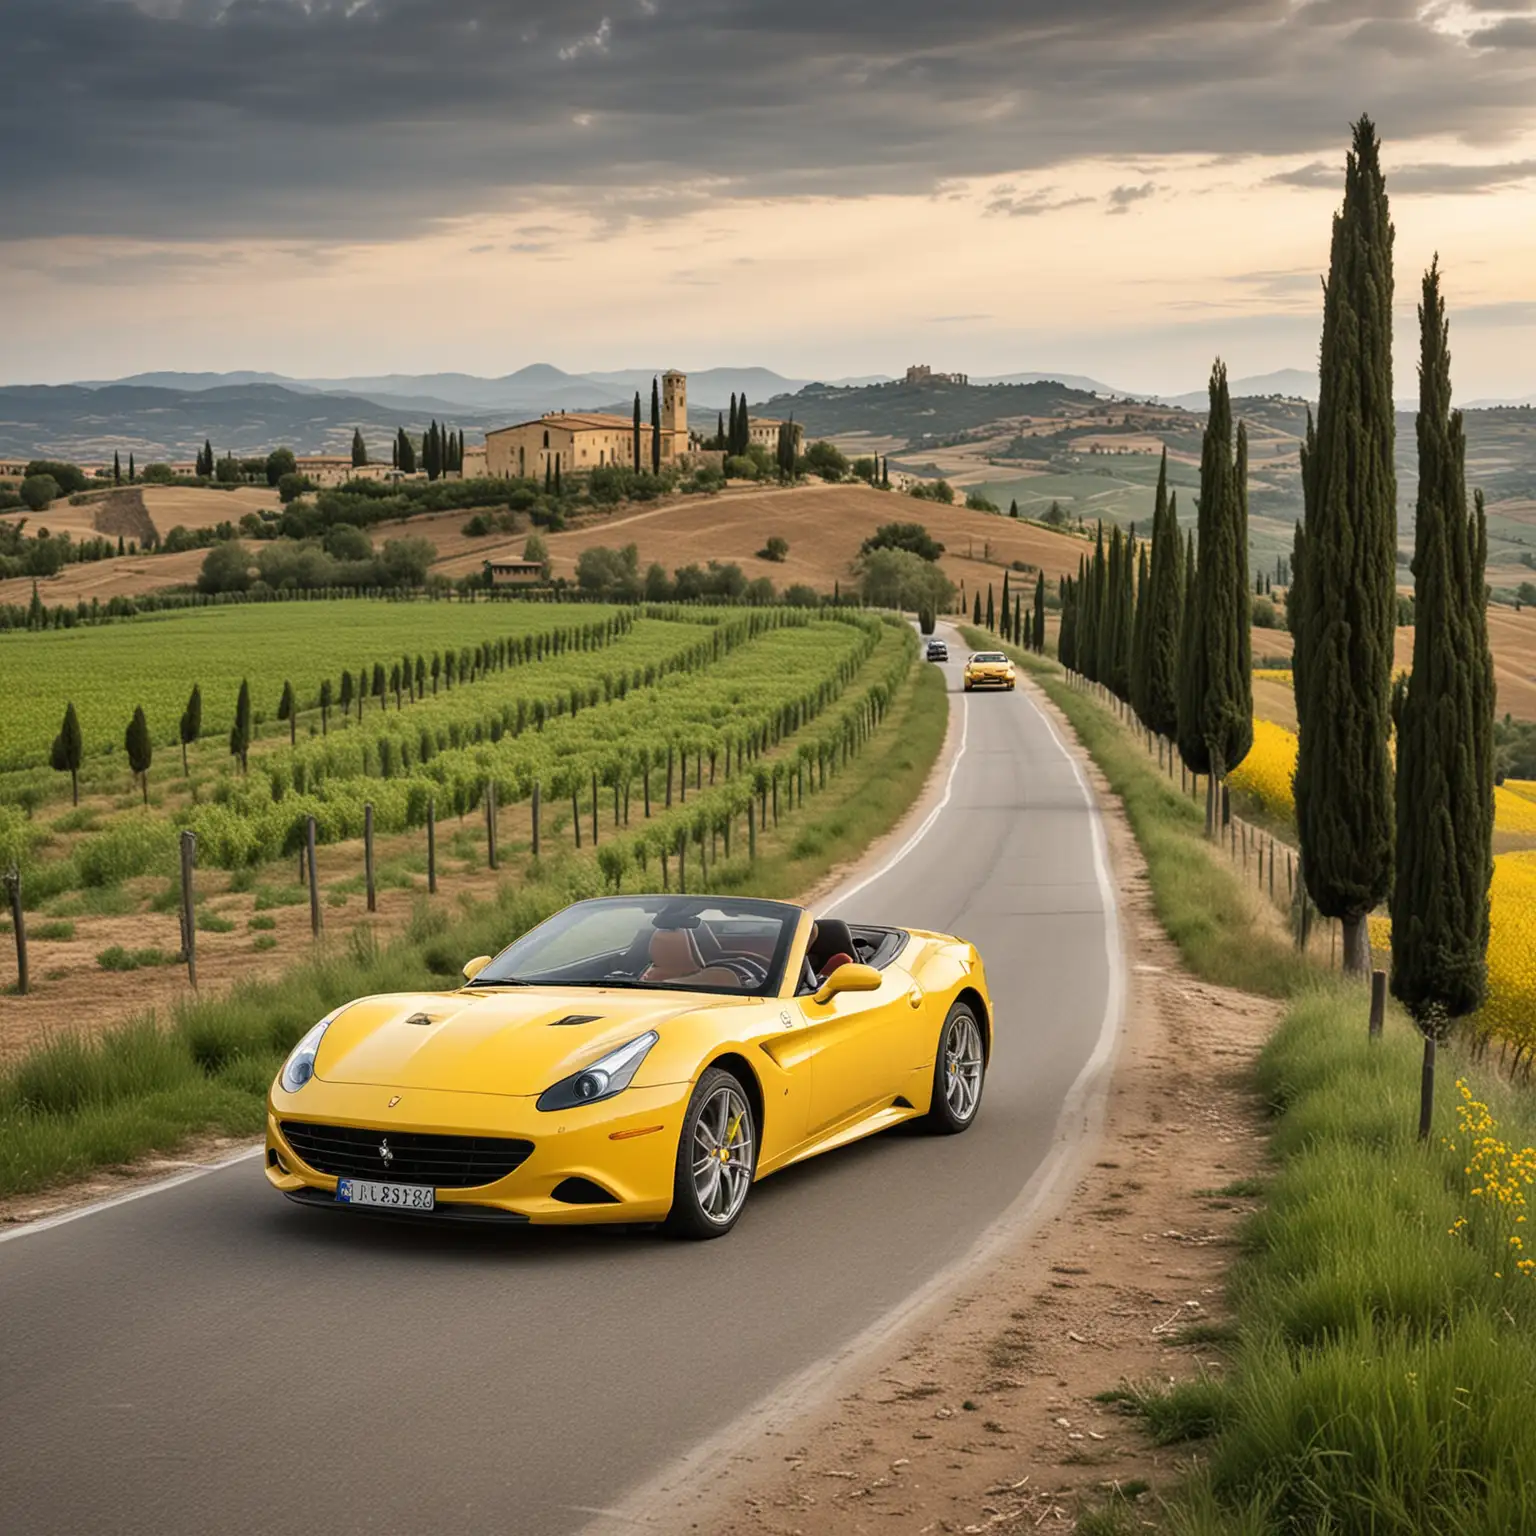 A yellow Ferrari California, pulling a small caravan, through the landscape of Tuscany